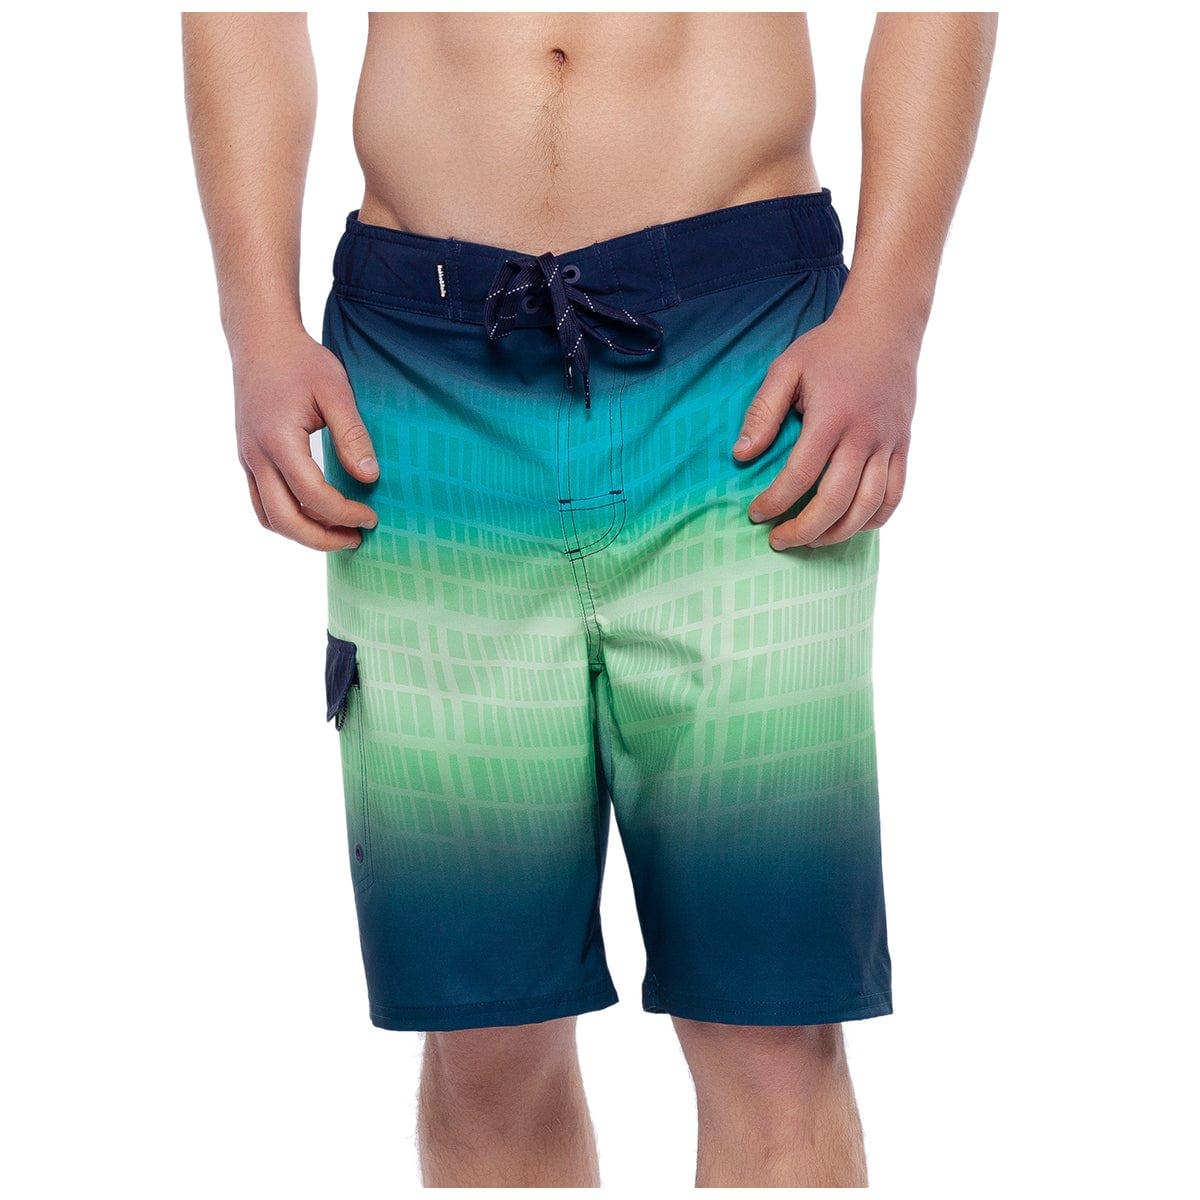 Men's 4-Way Stretch Board Shorts 9" Quick Dry Beach Swimwear